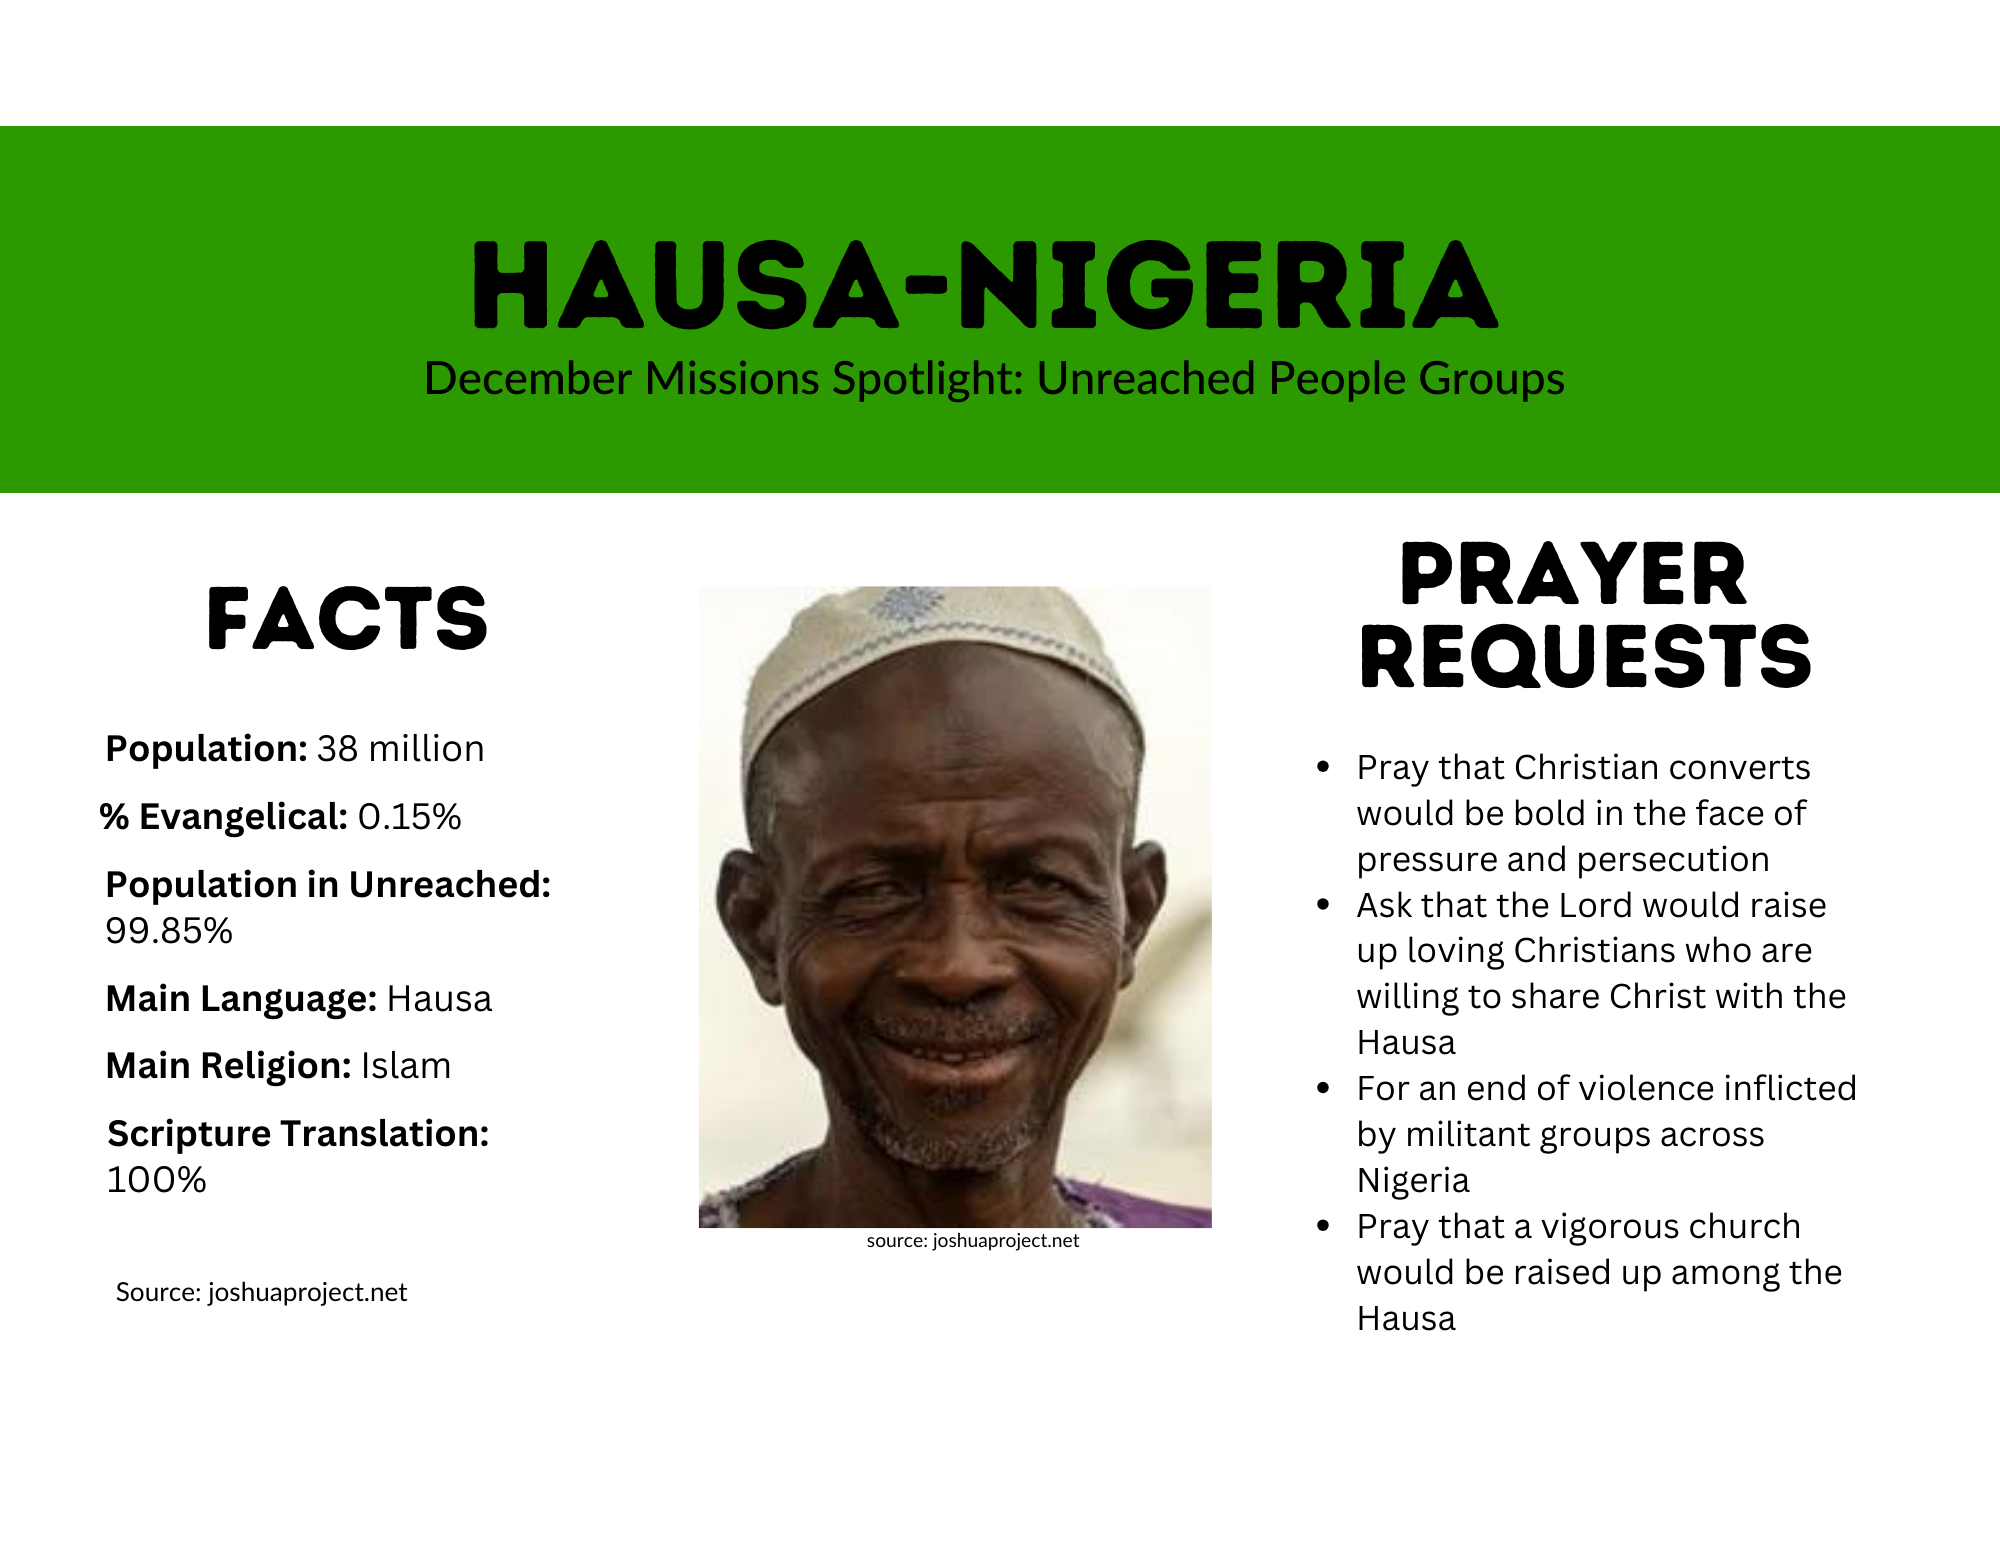 Hausa-Nigeria